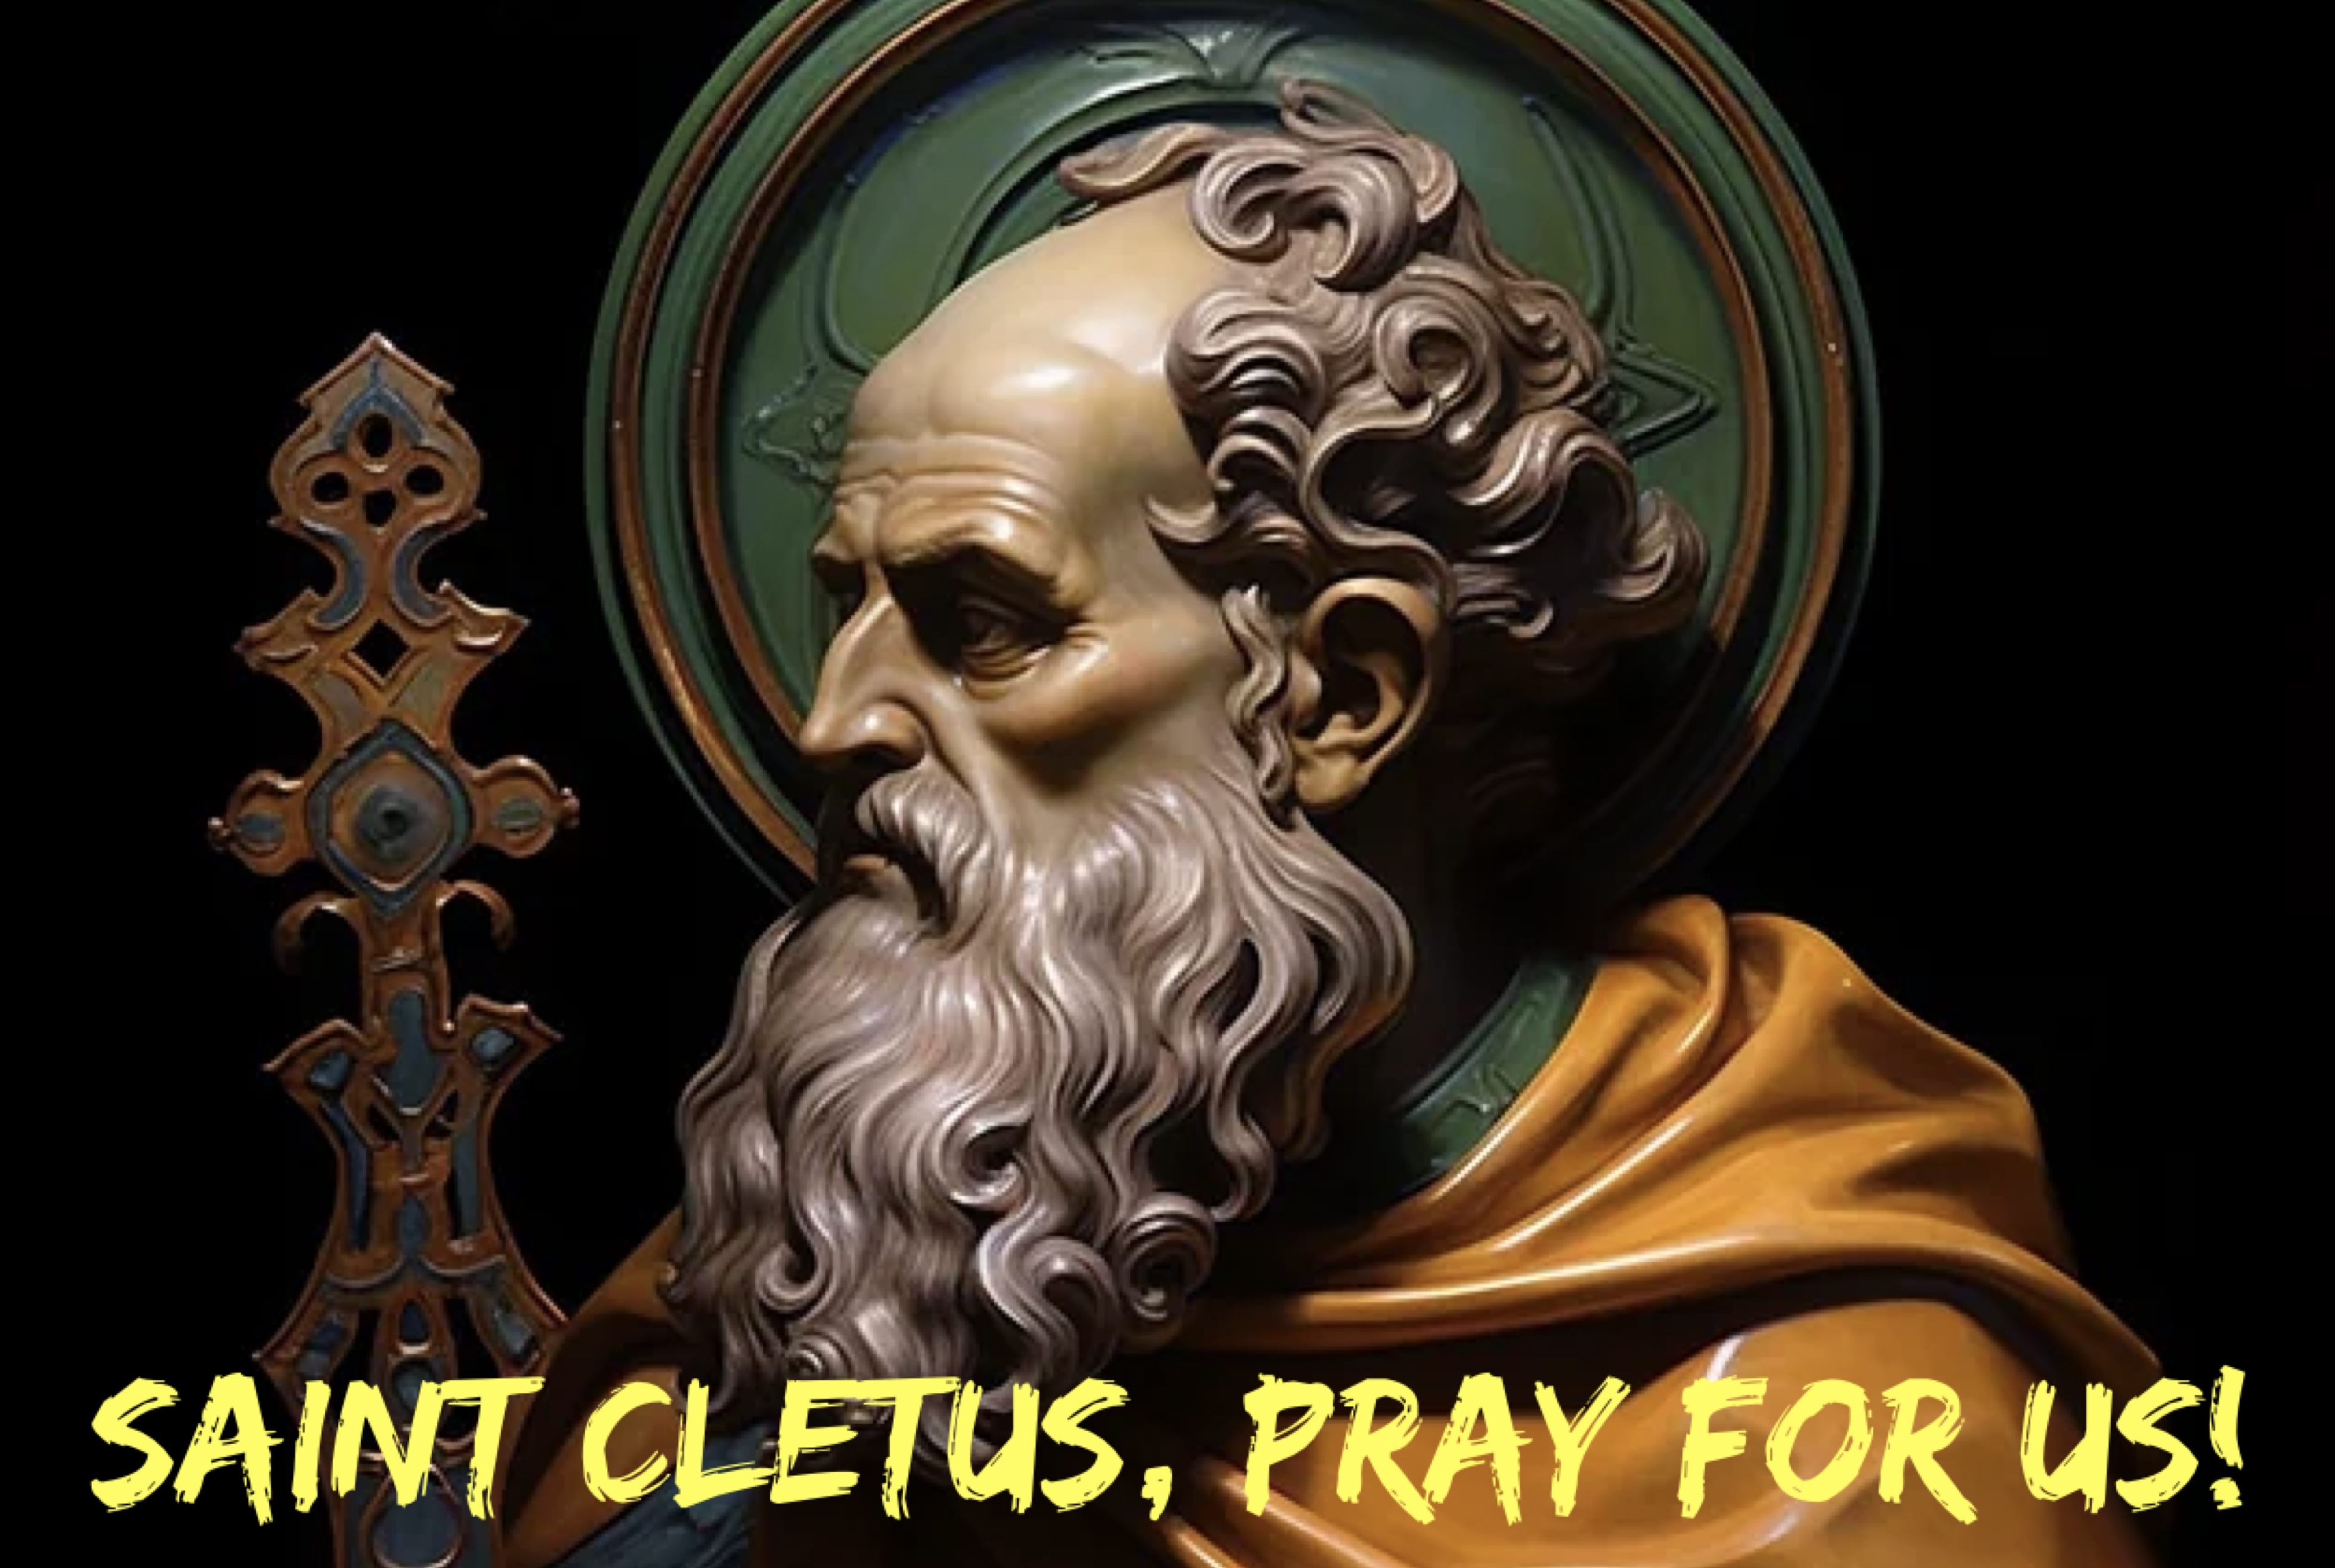 26th April - Saint Cletus